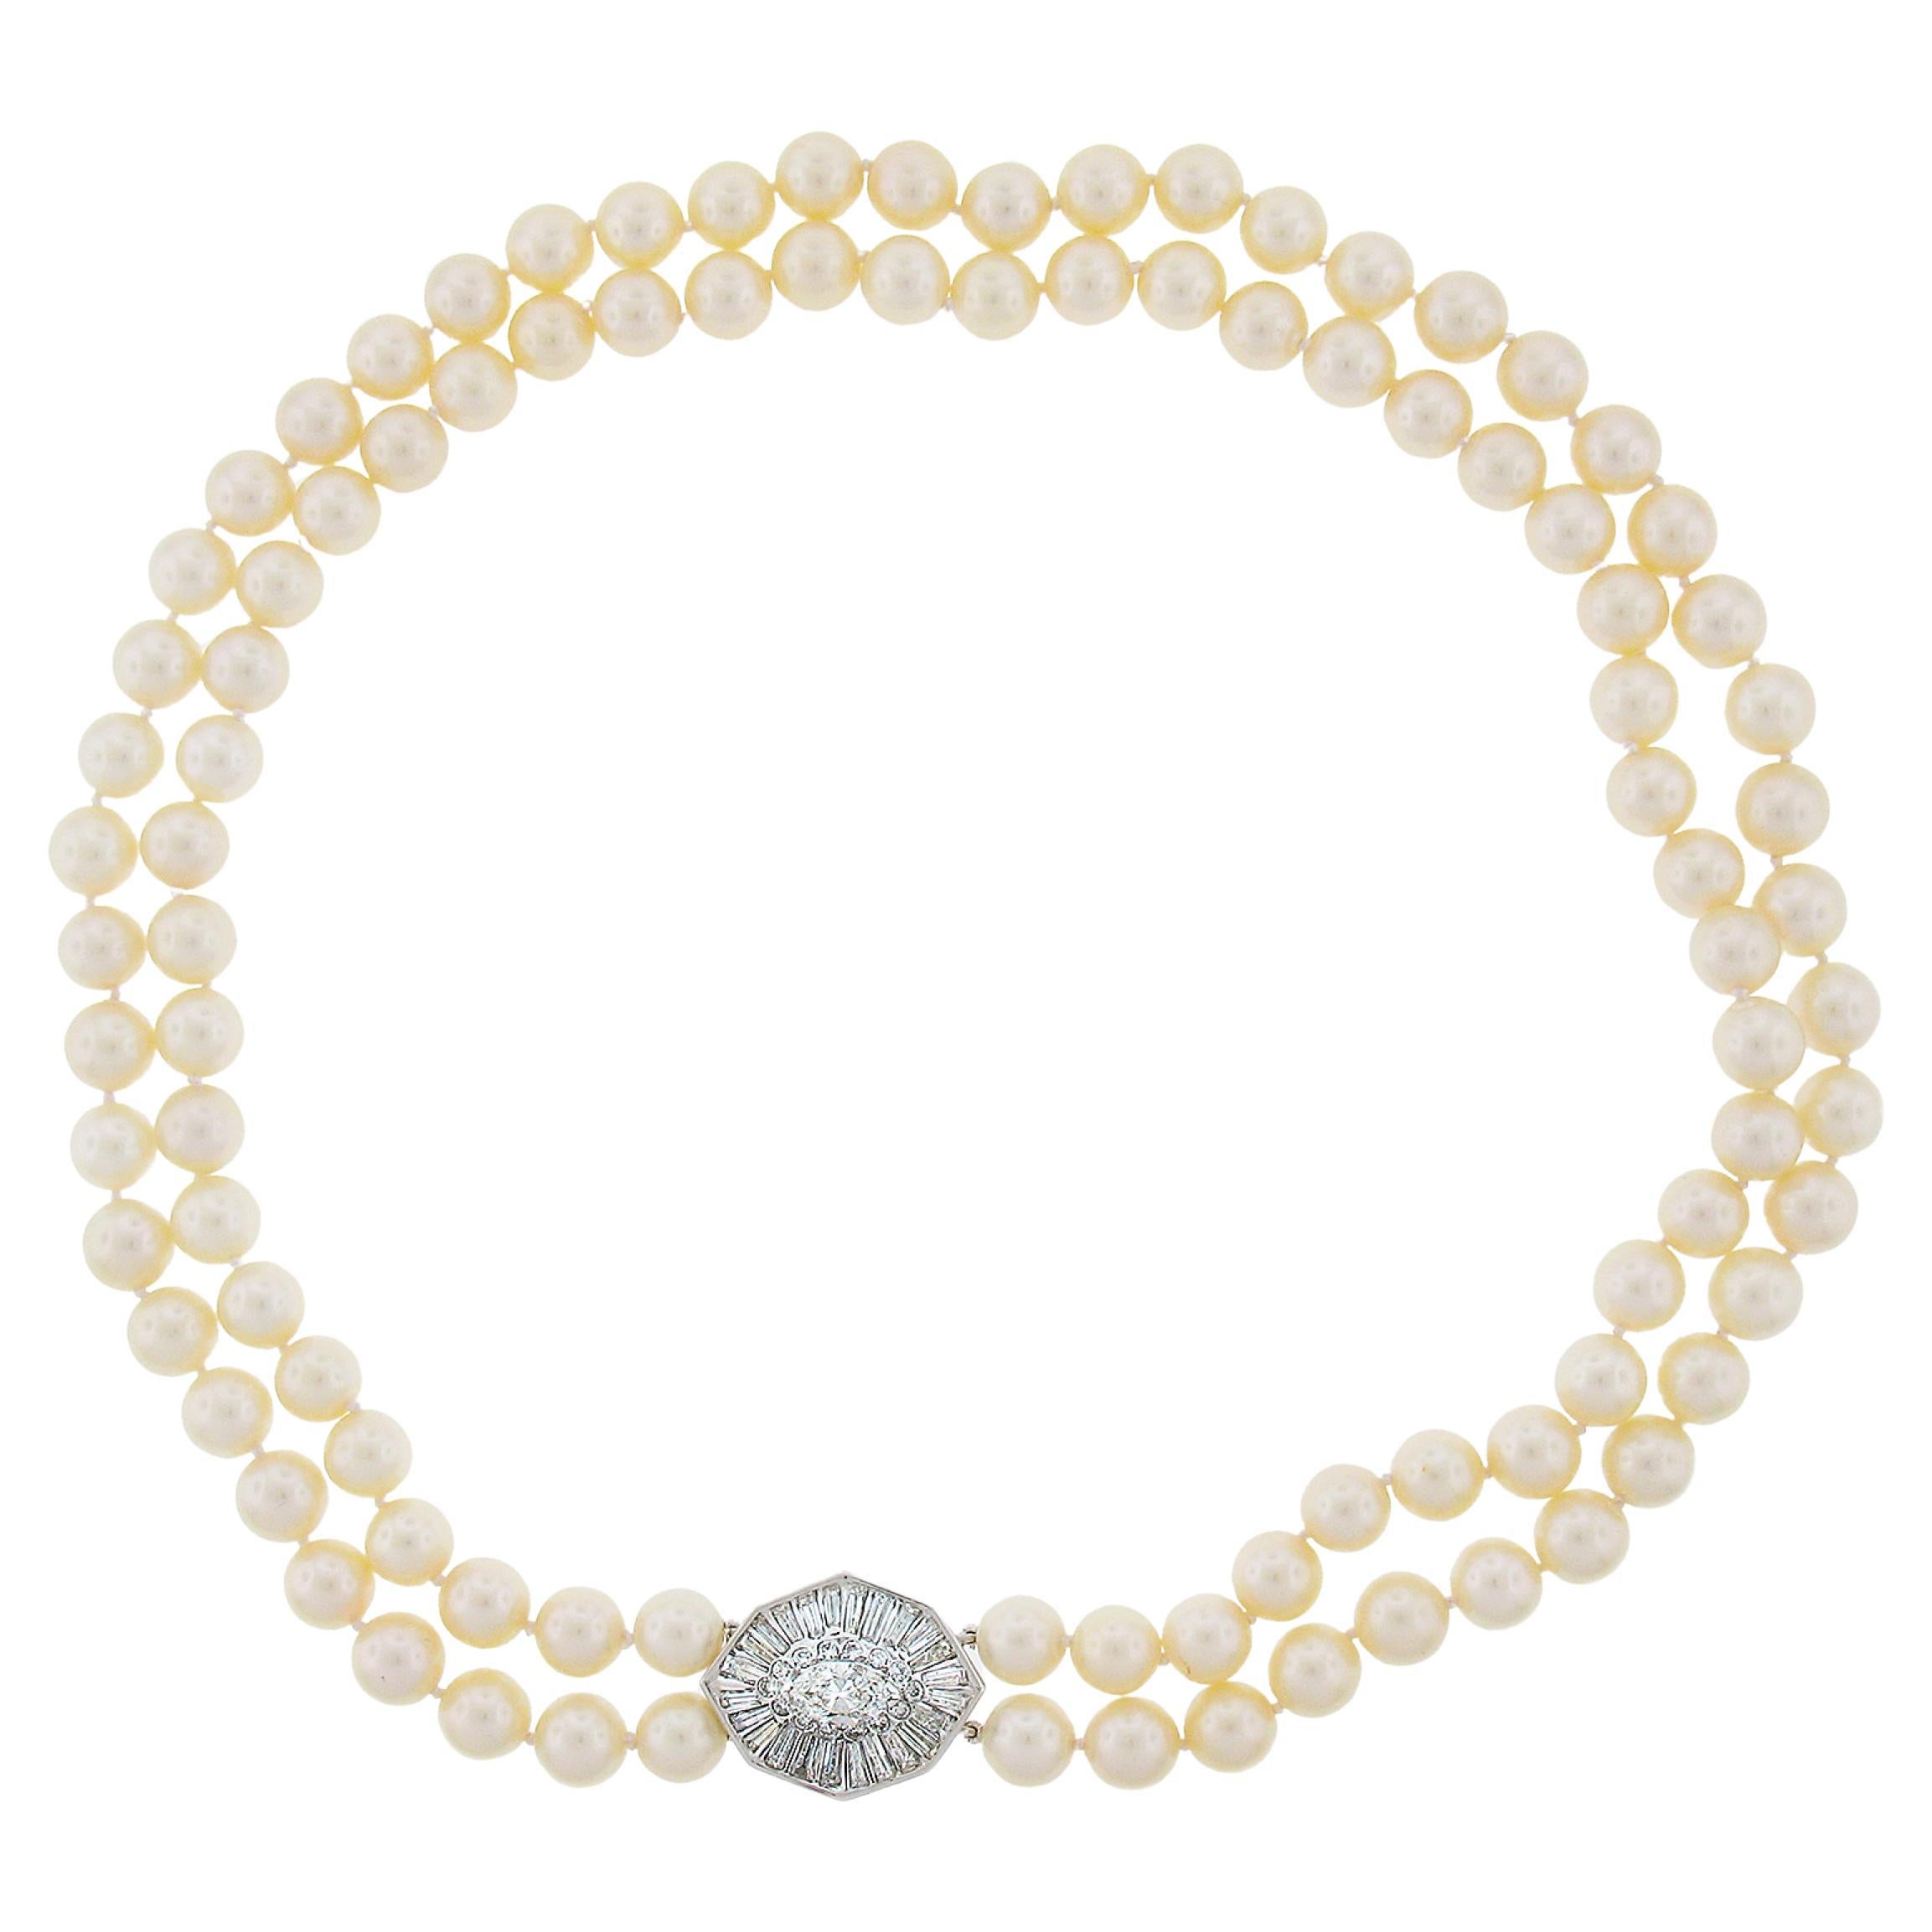 18k White Gold Dual Strand 8-8.5mm Pearl Necklace w/ GIA 3.68ctw Diamond Clasp